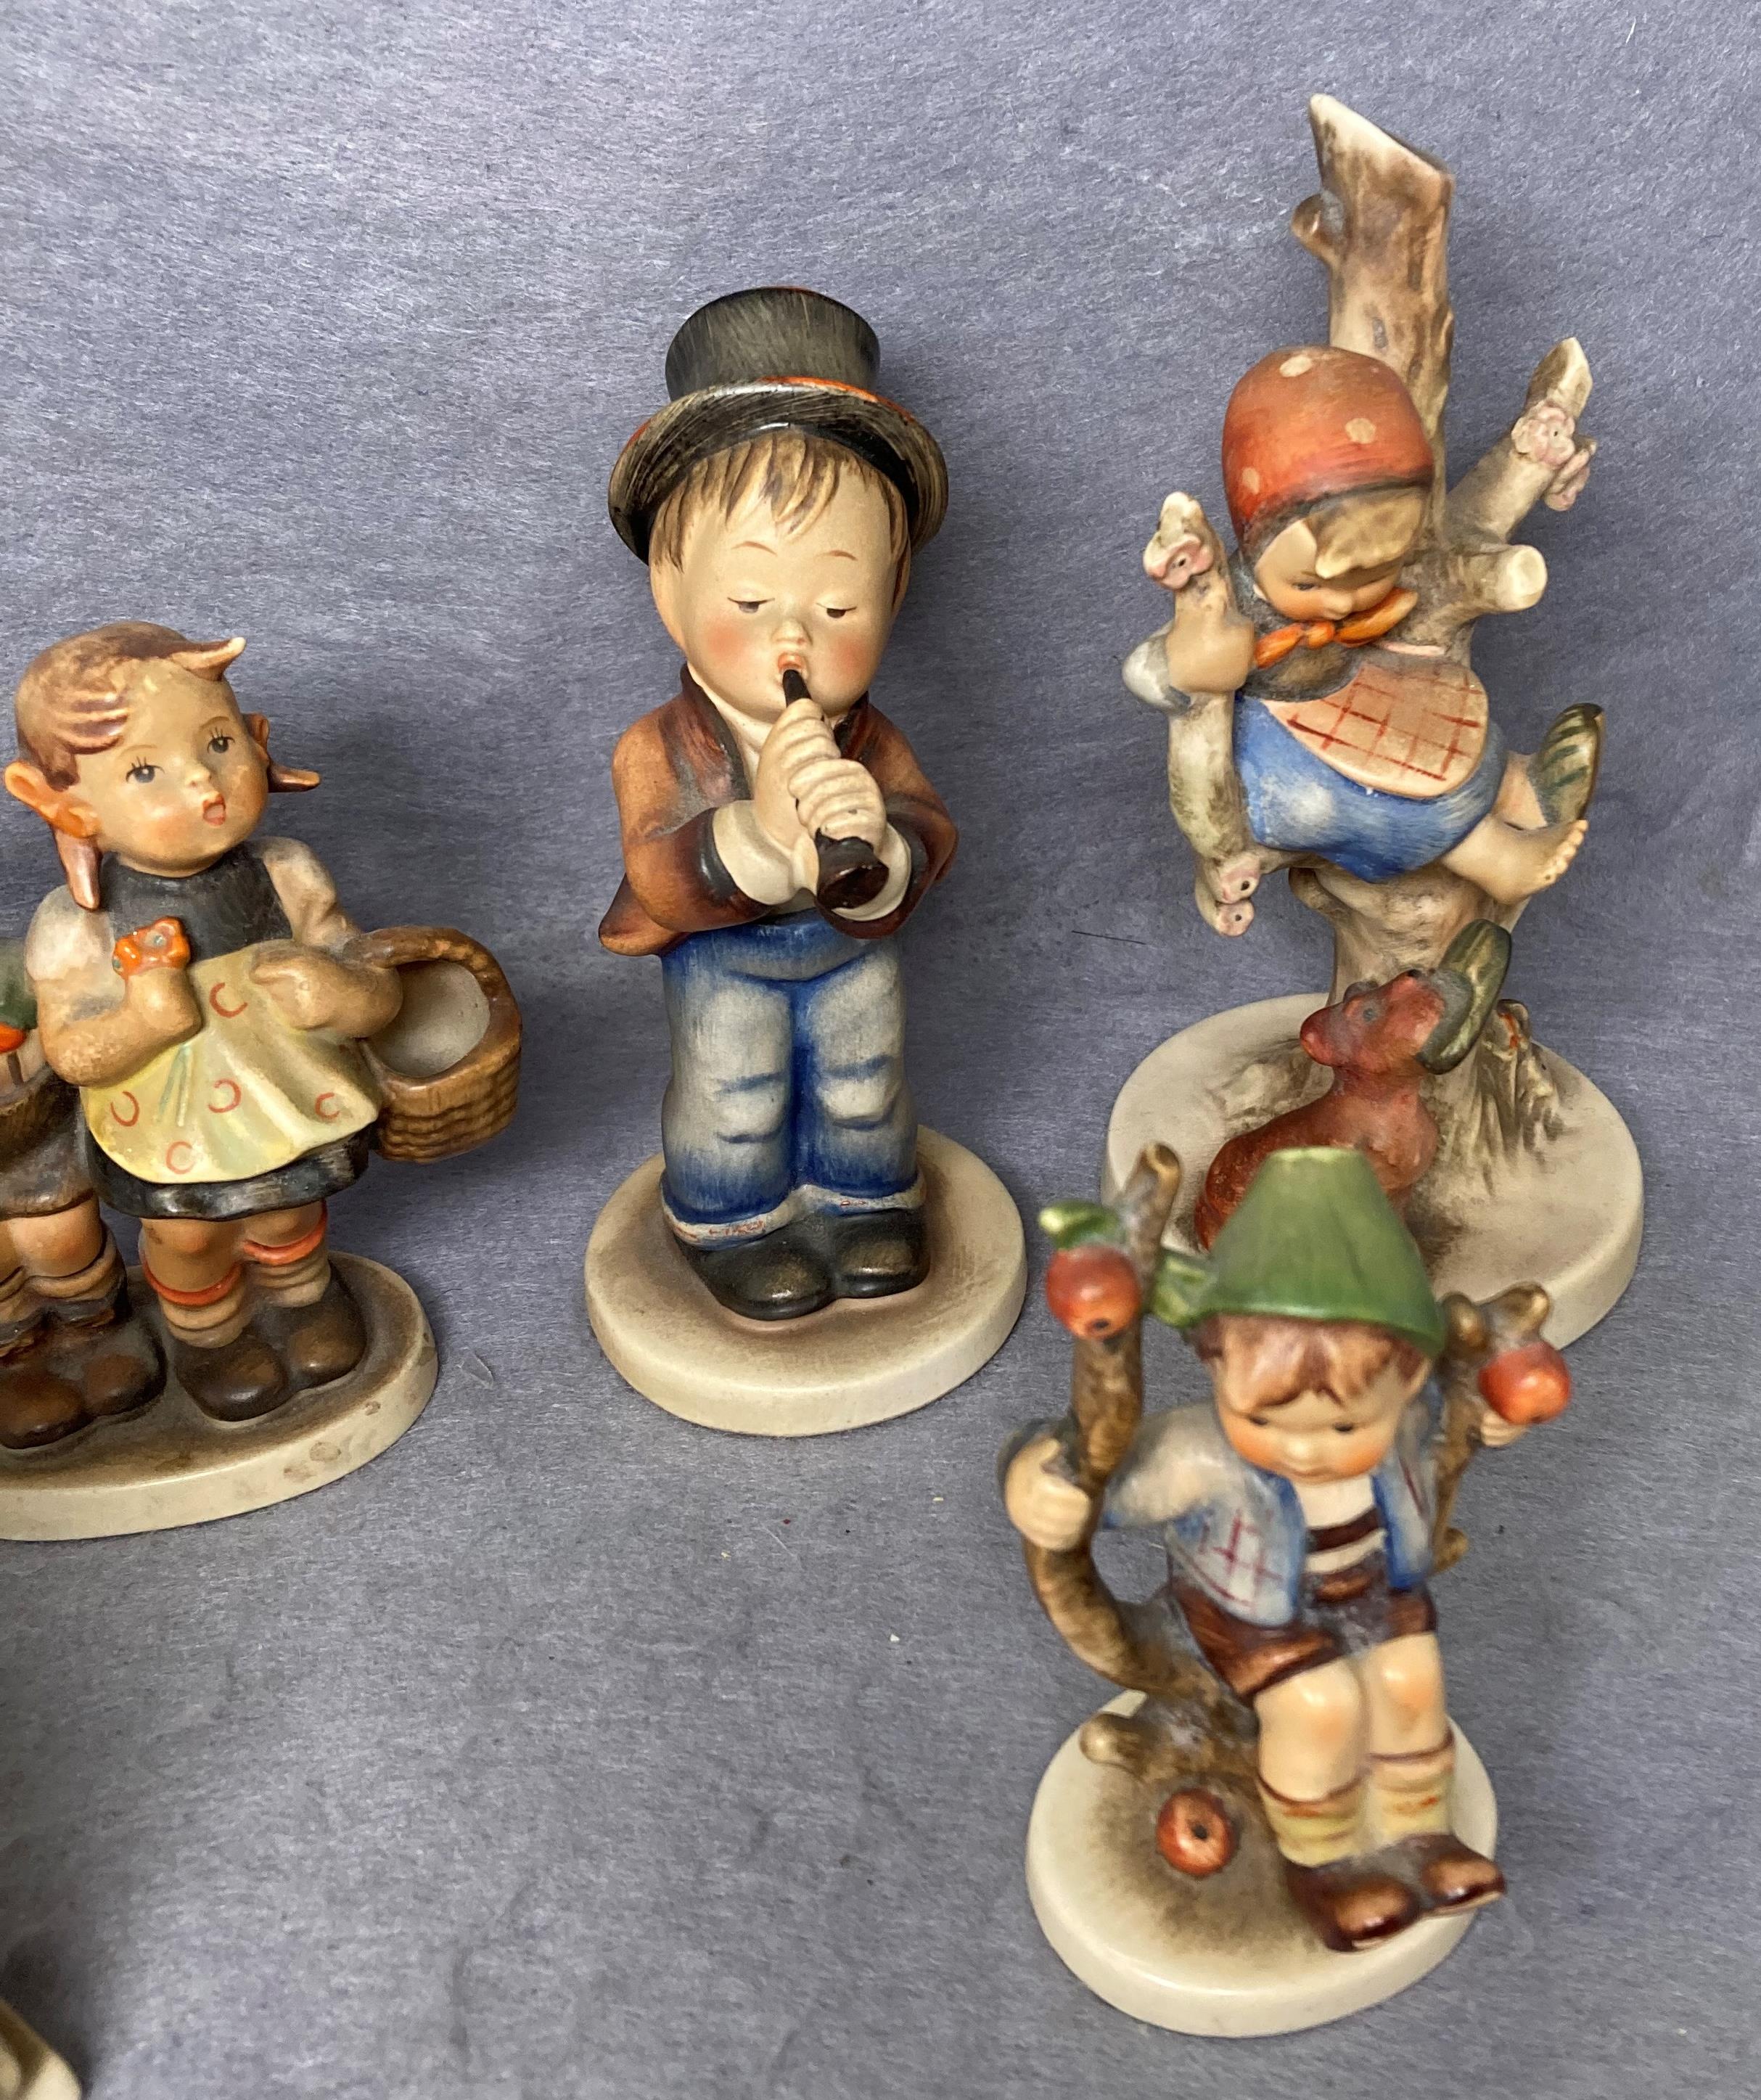 Six 20th Century Hummel ceramic figurines (one has been repaired) (saleroom location: S3 QC17 GC) - Image 3 of 5